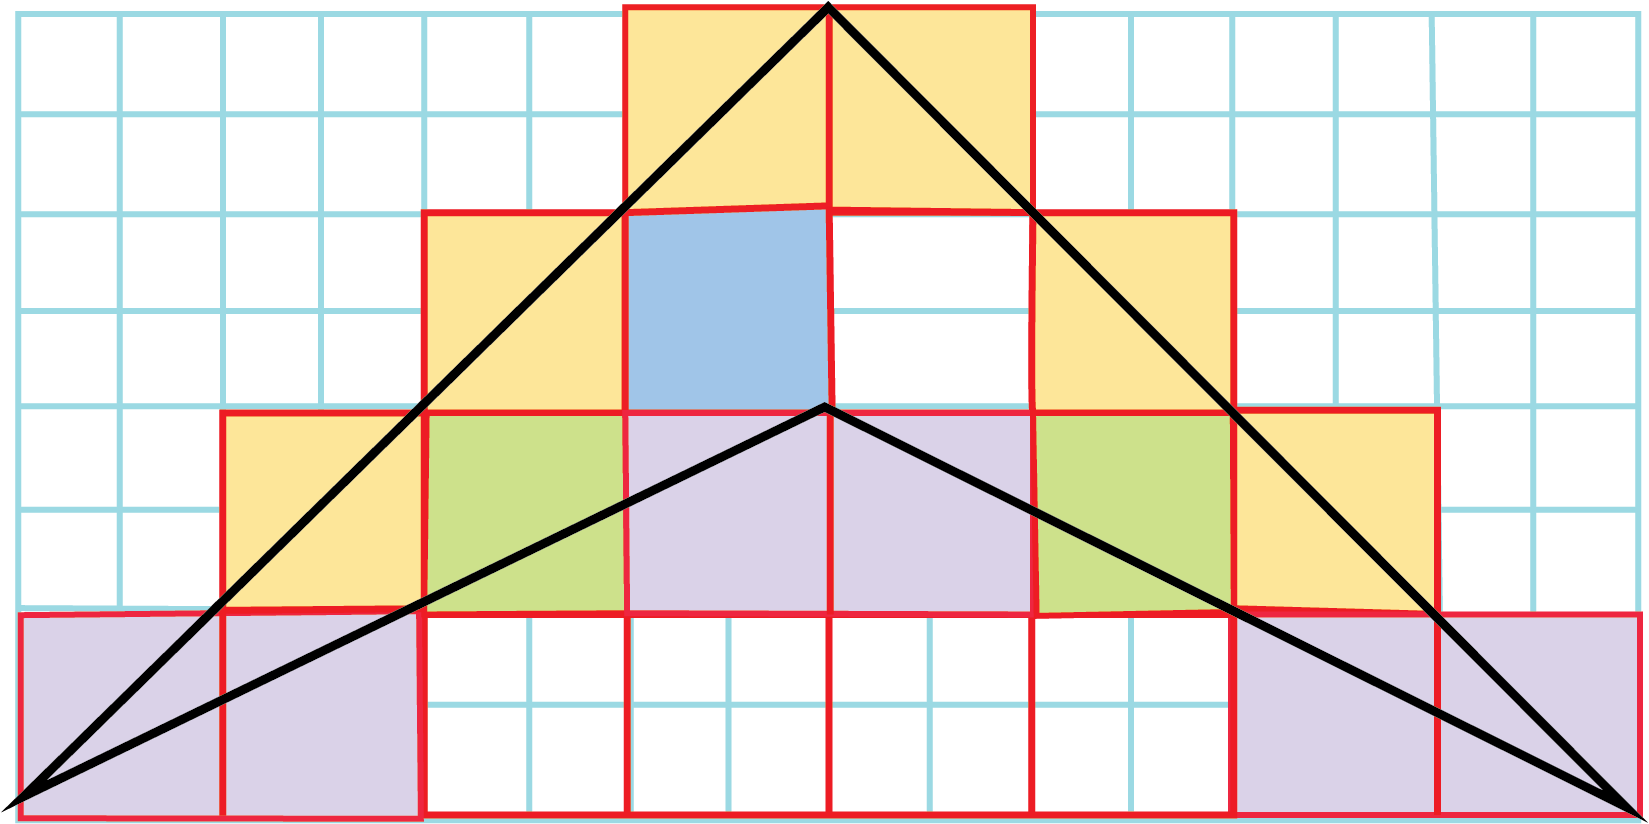 11 square units